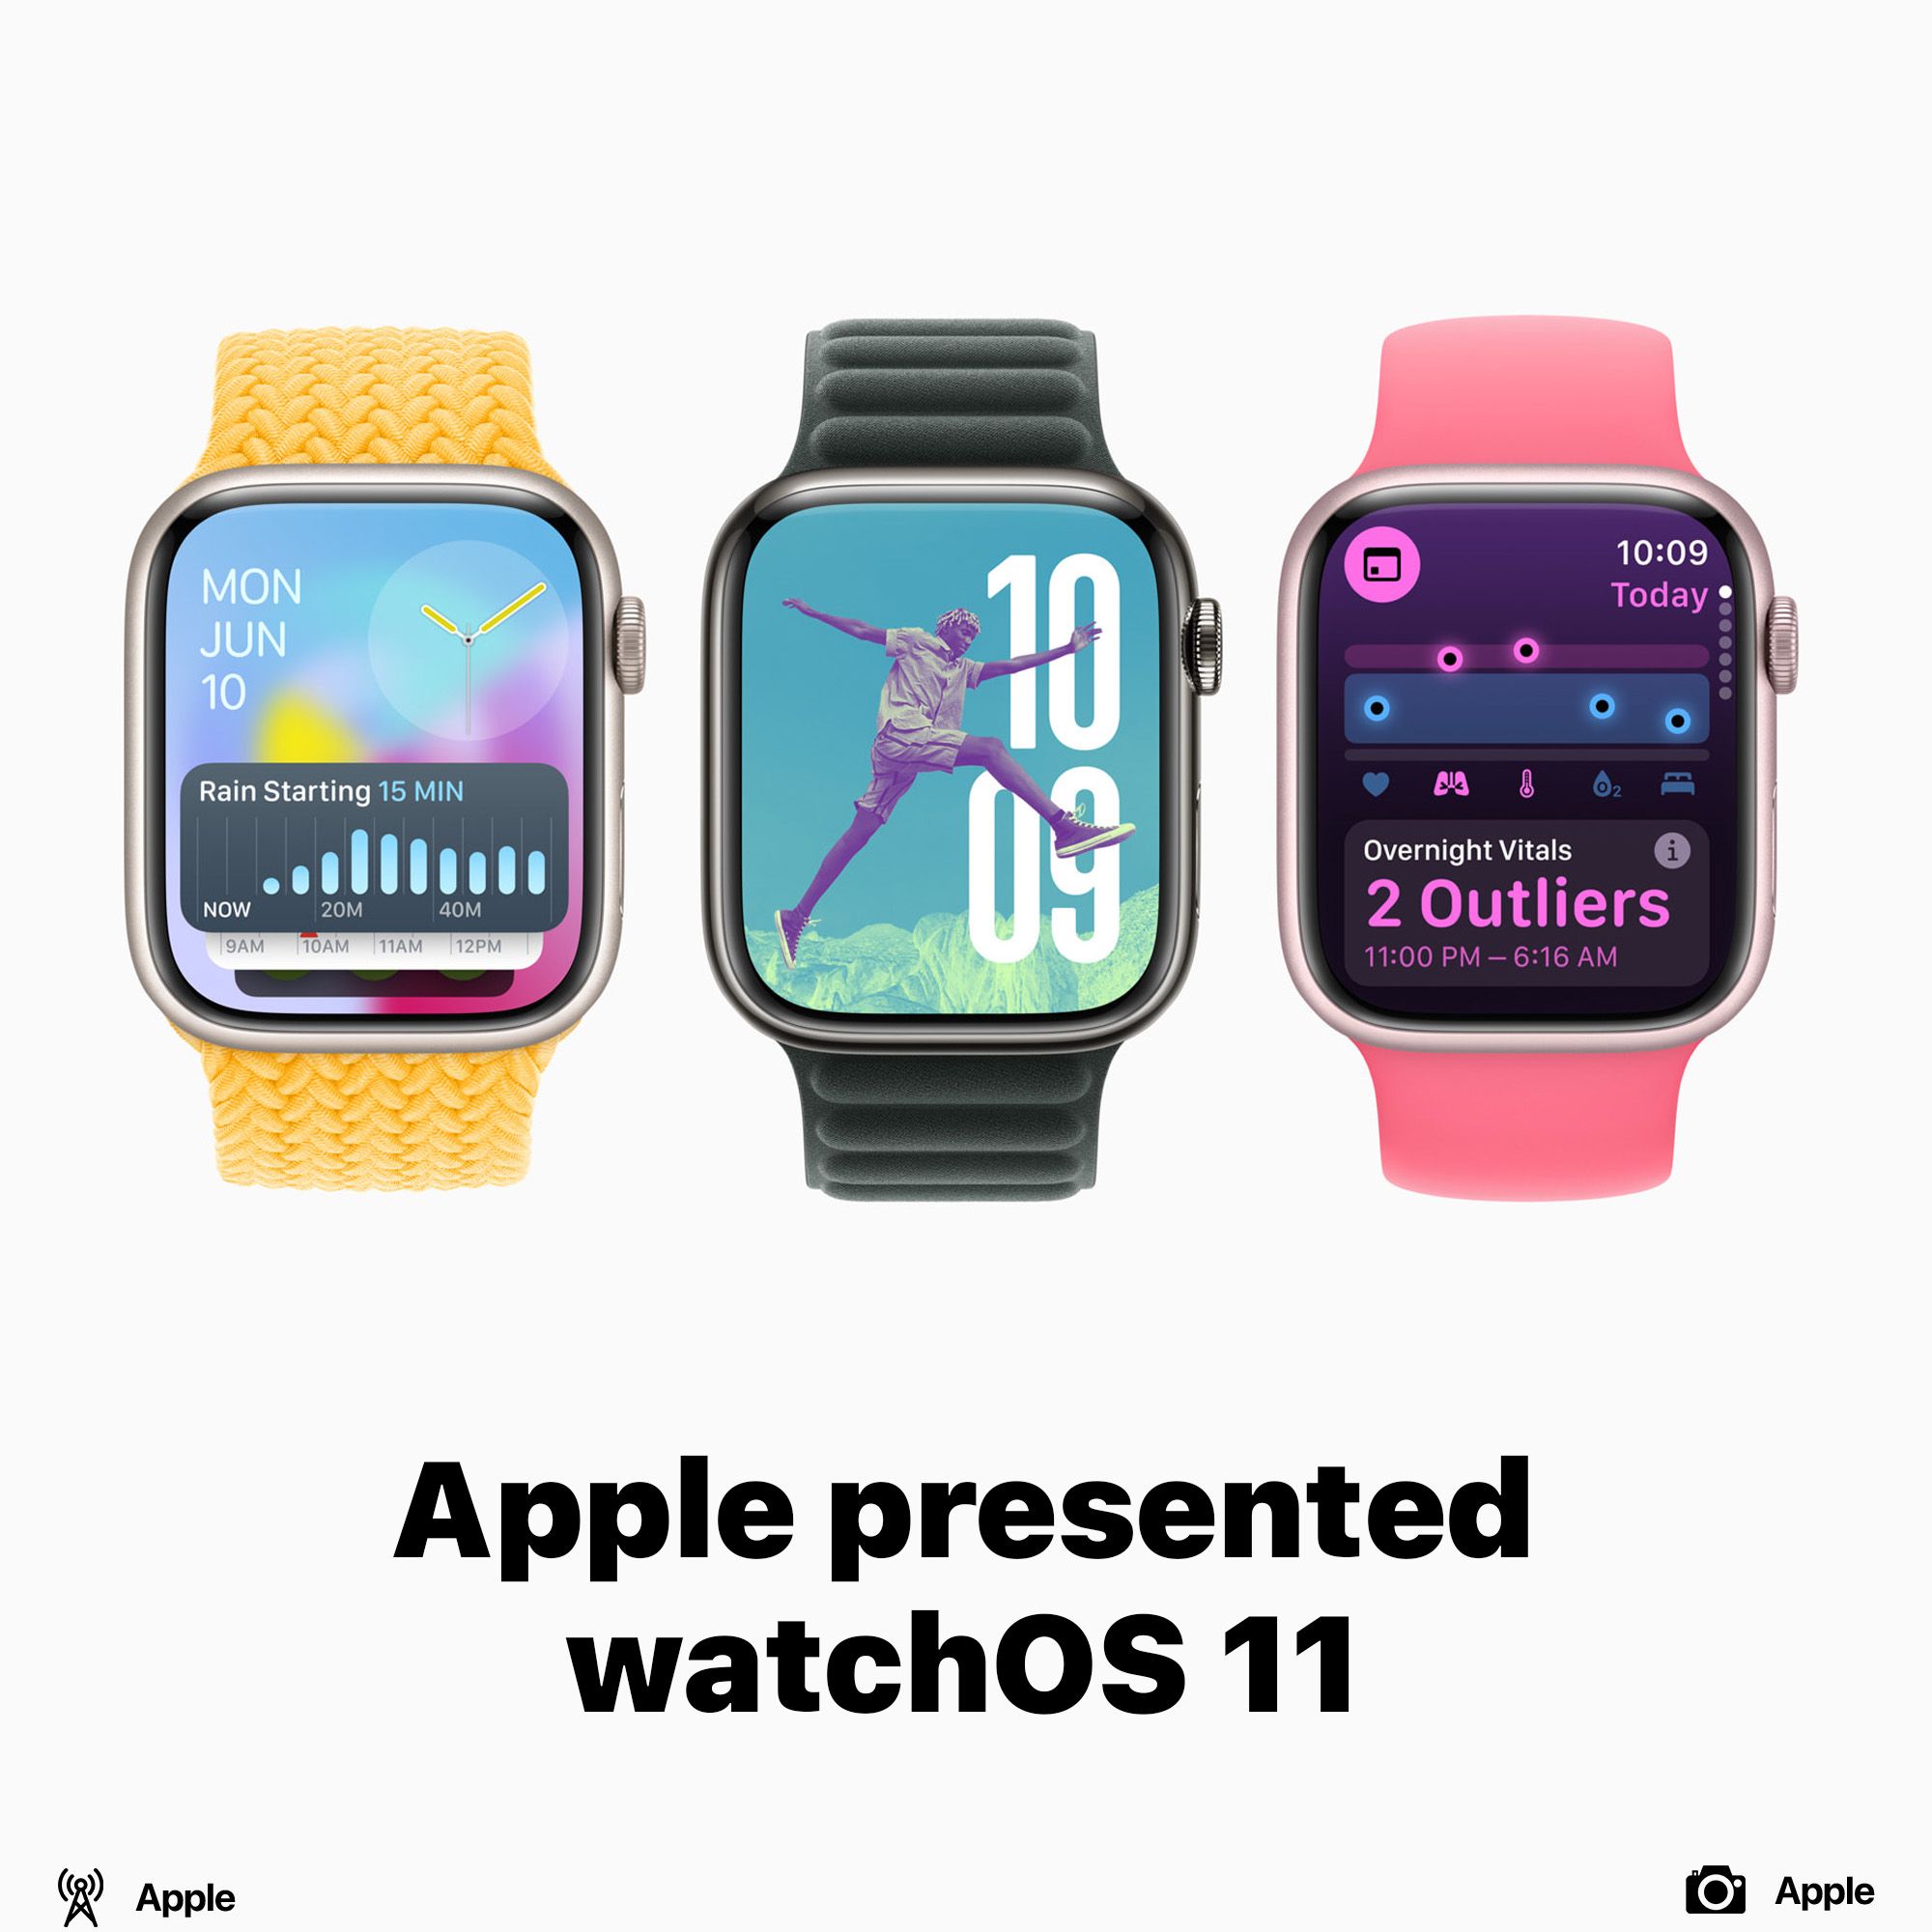 Apple presented watchOS 11